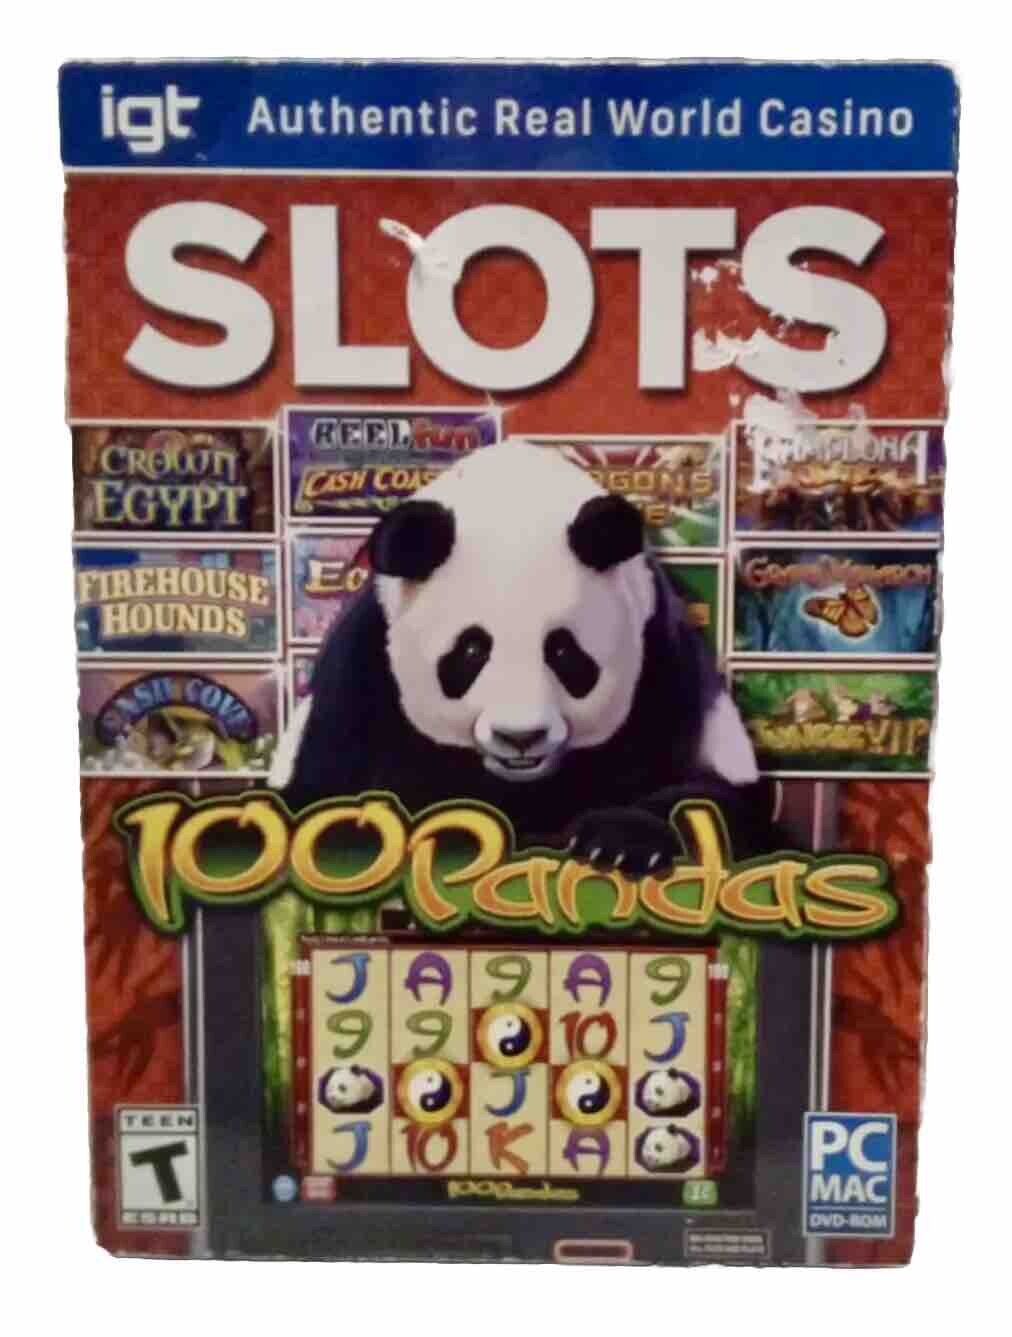 igt 100 Pandas Slots PC - Real World Casino